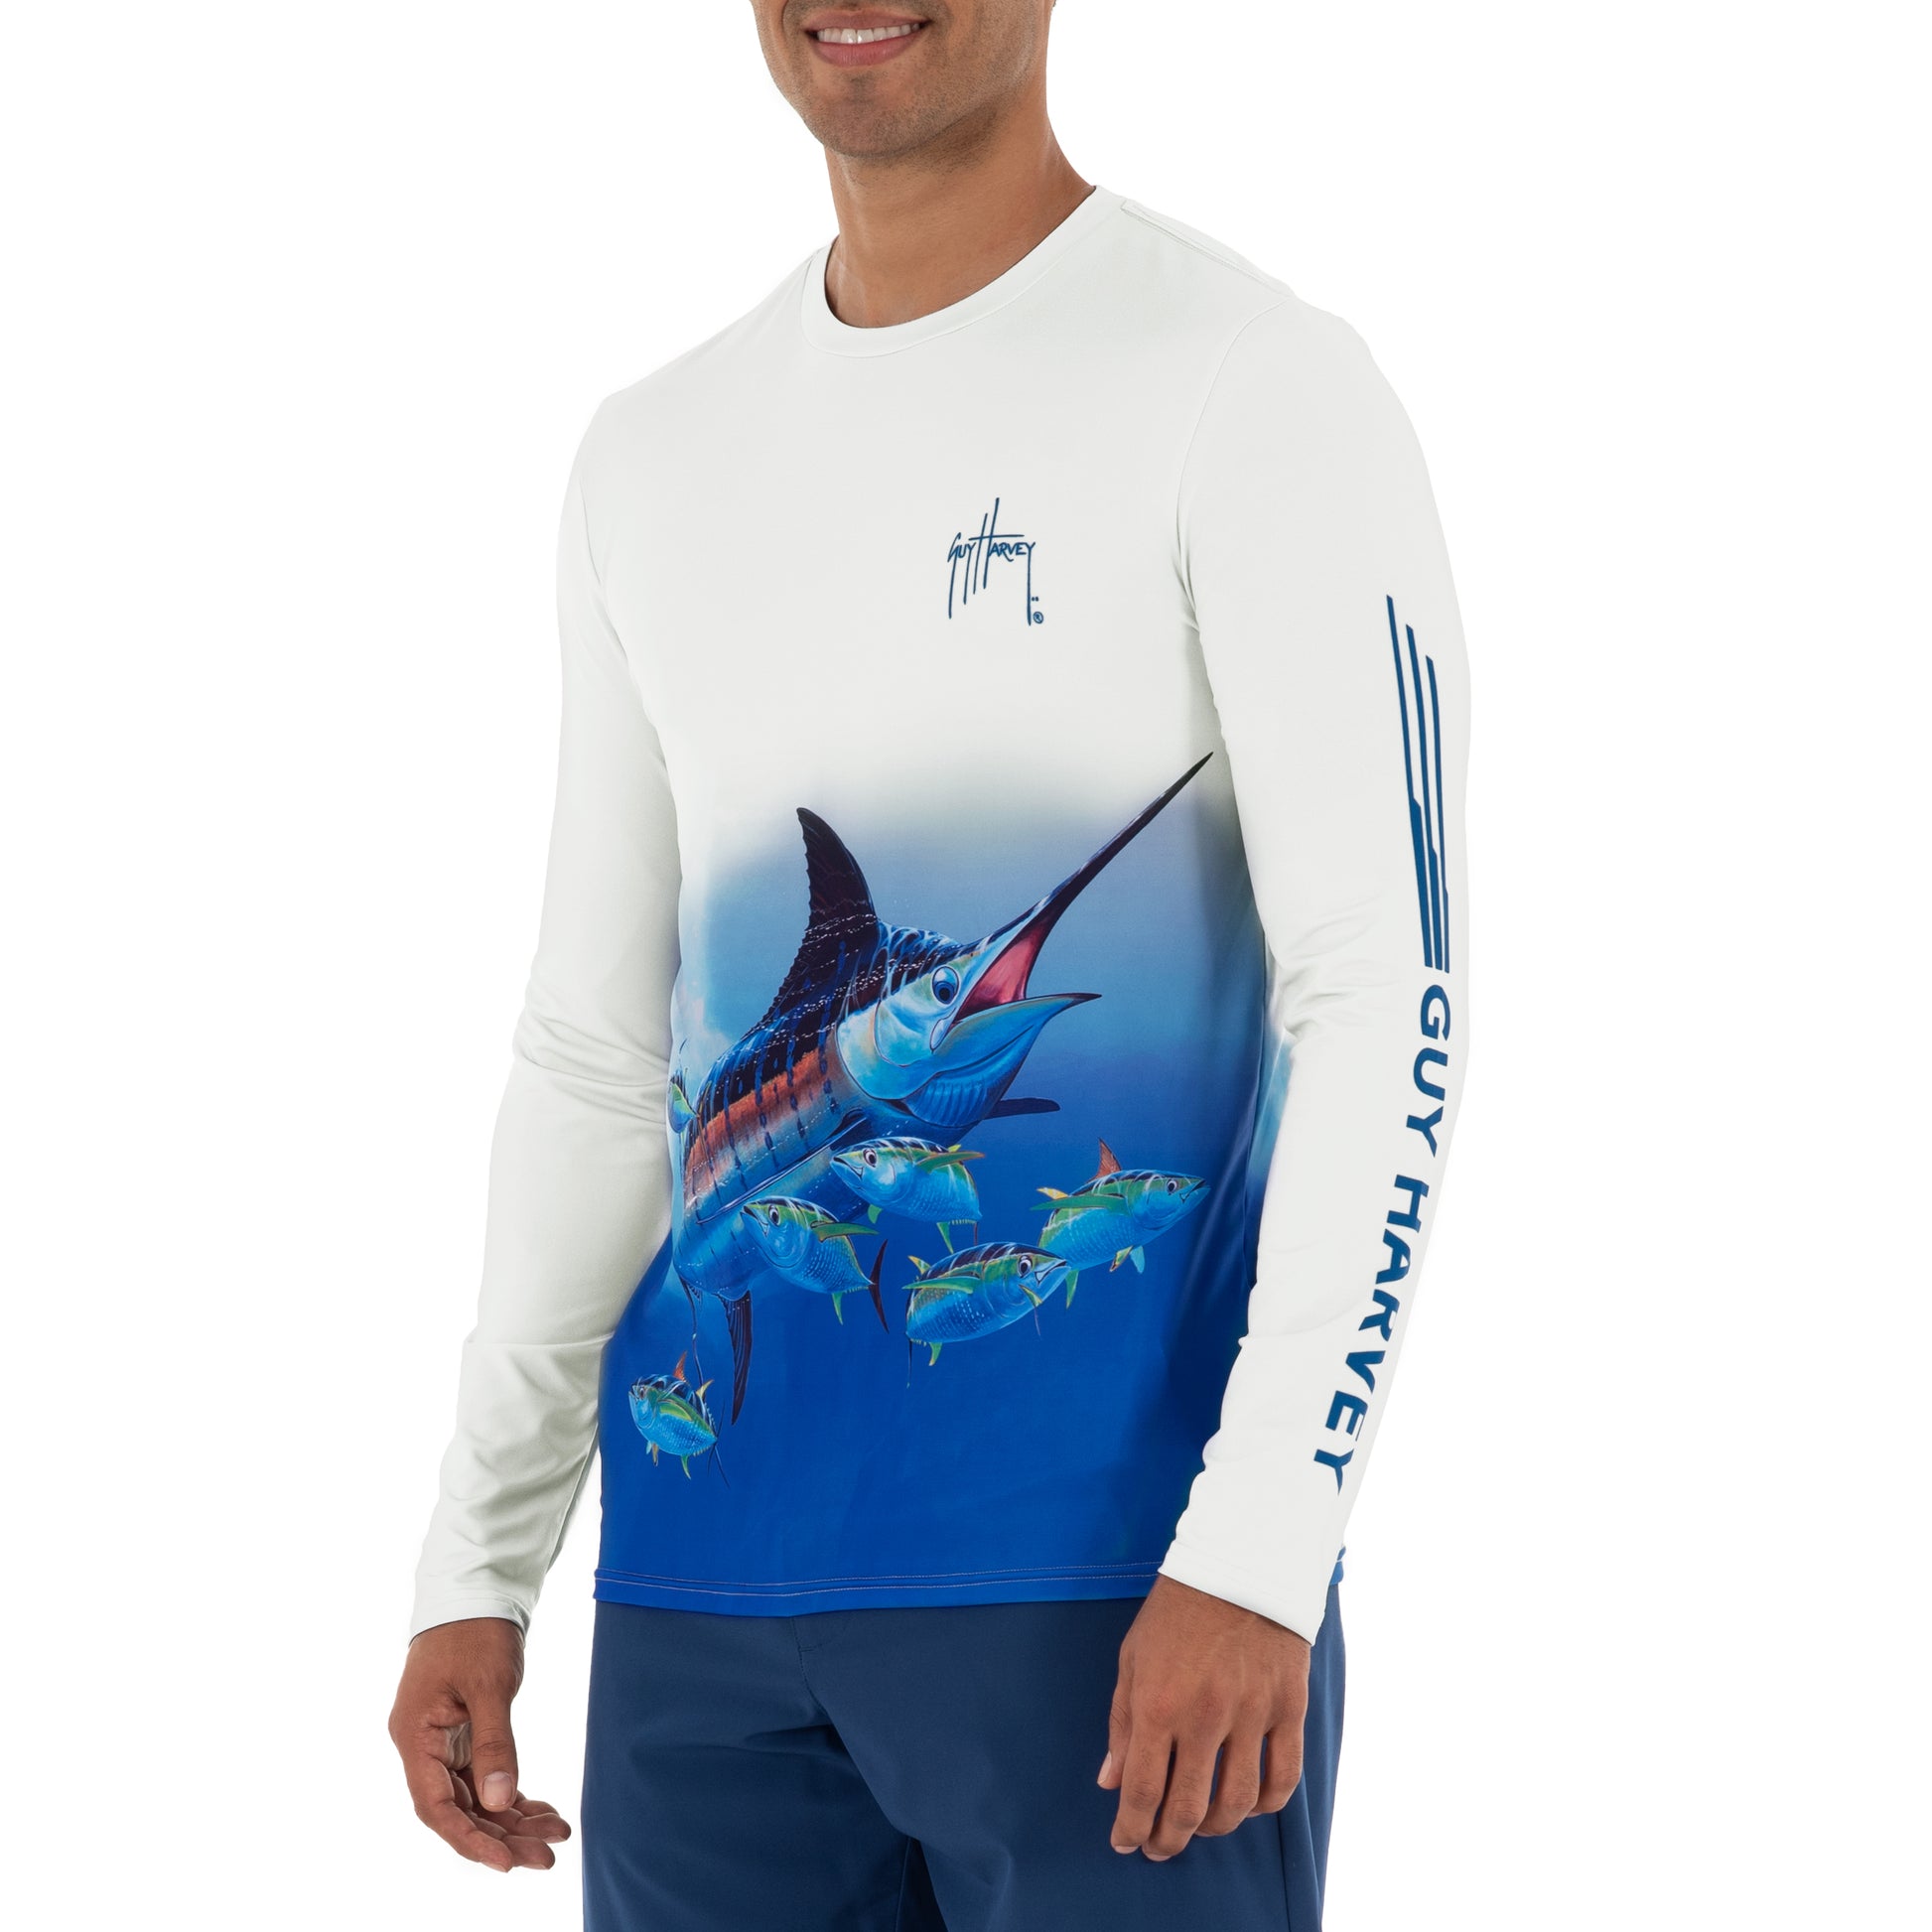 USA fishing clothing Brands Atlantic Pursuit Fishing sleeve